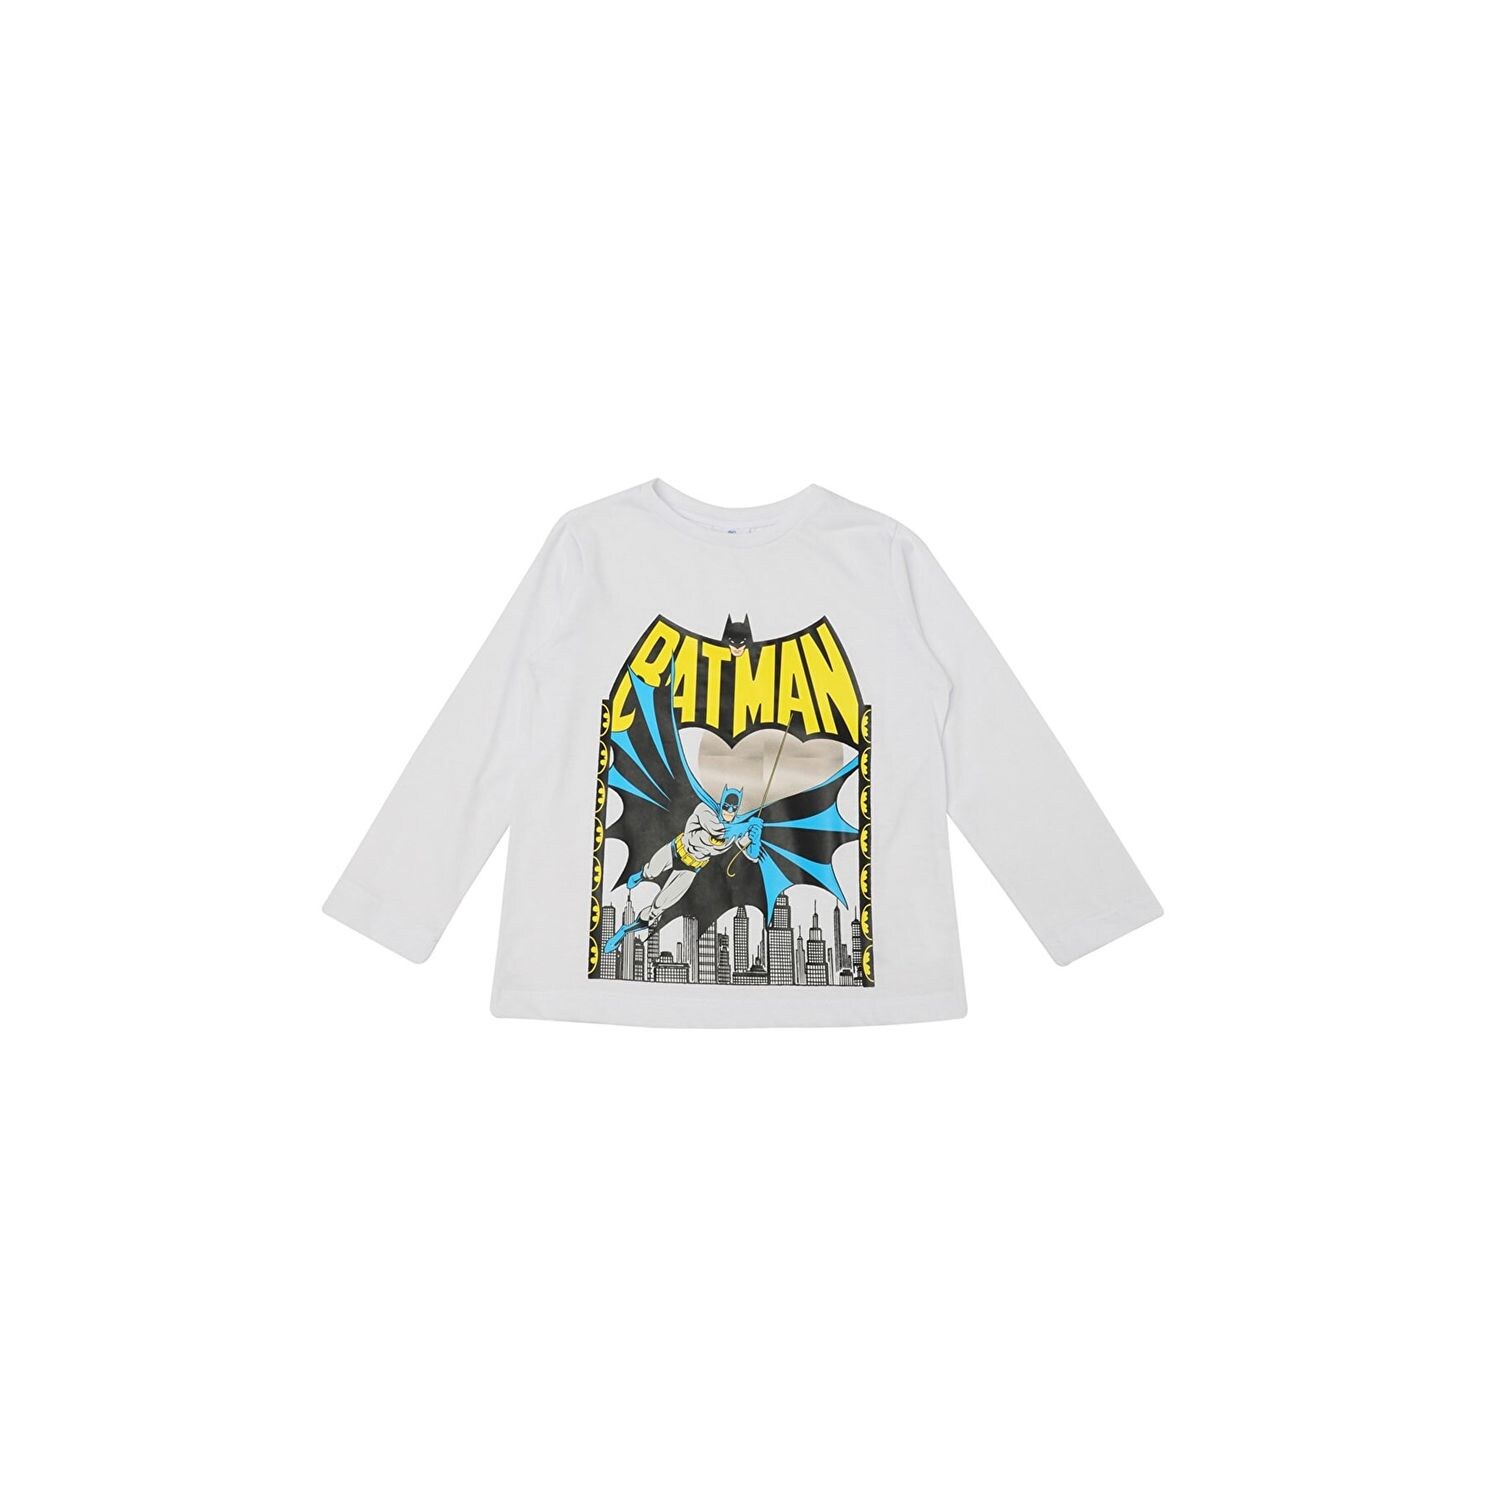 Trendyol White Batman Printed Boy Knitted T-Shirt